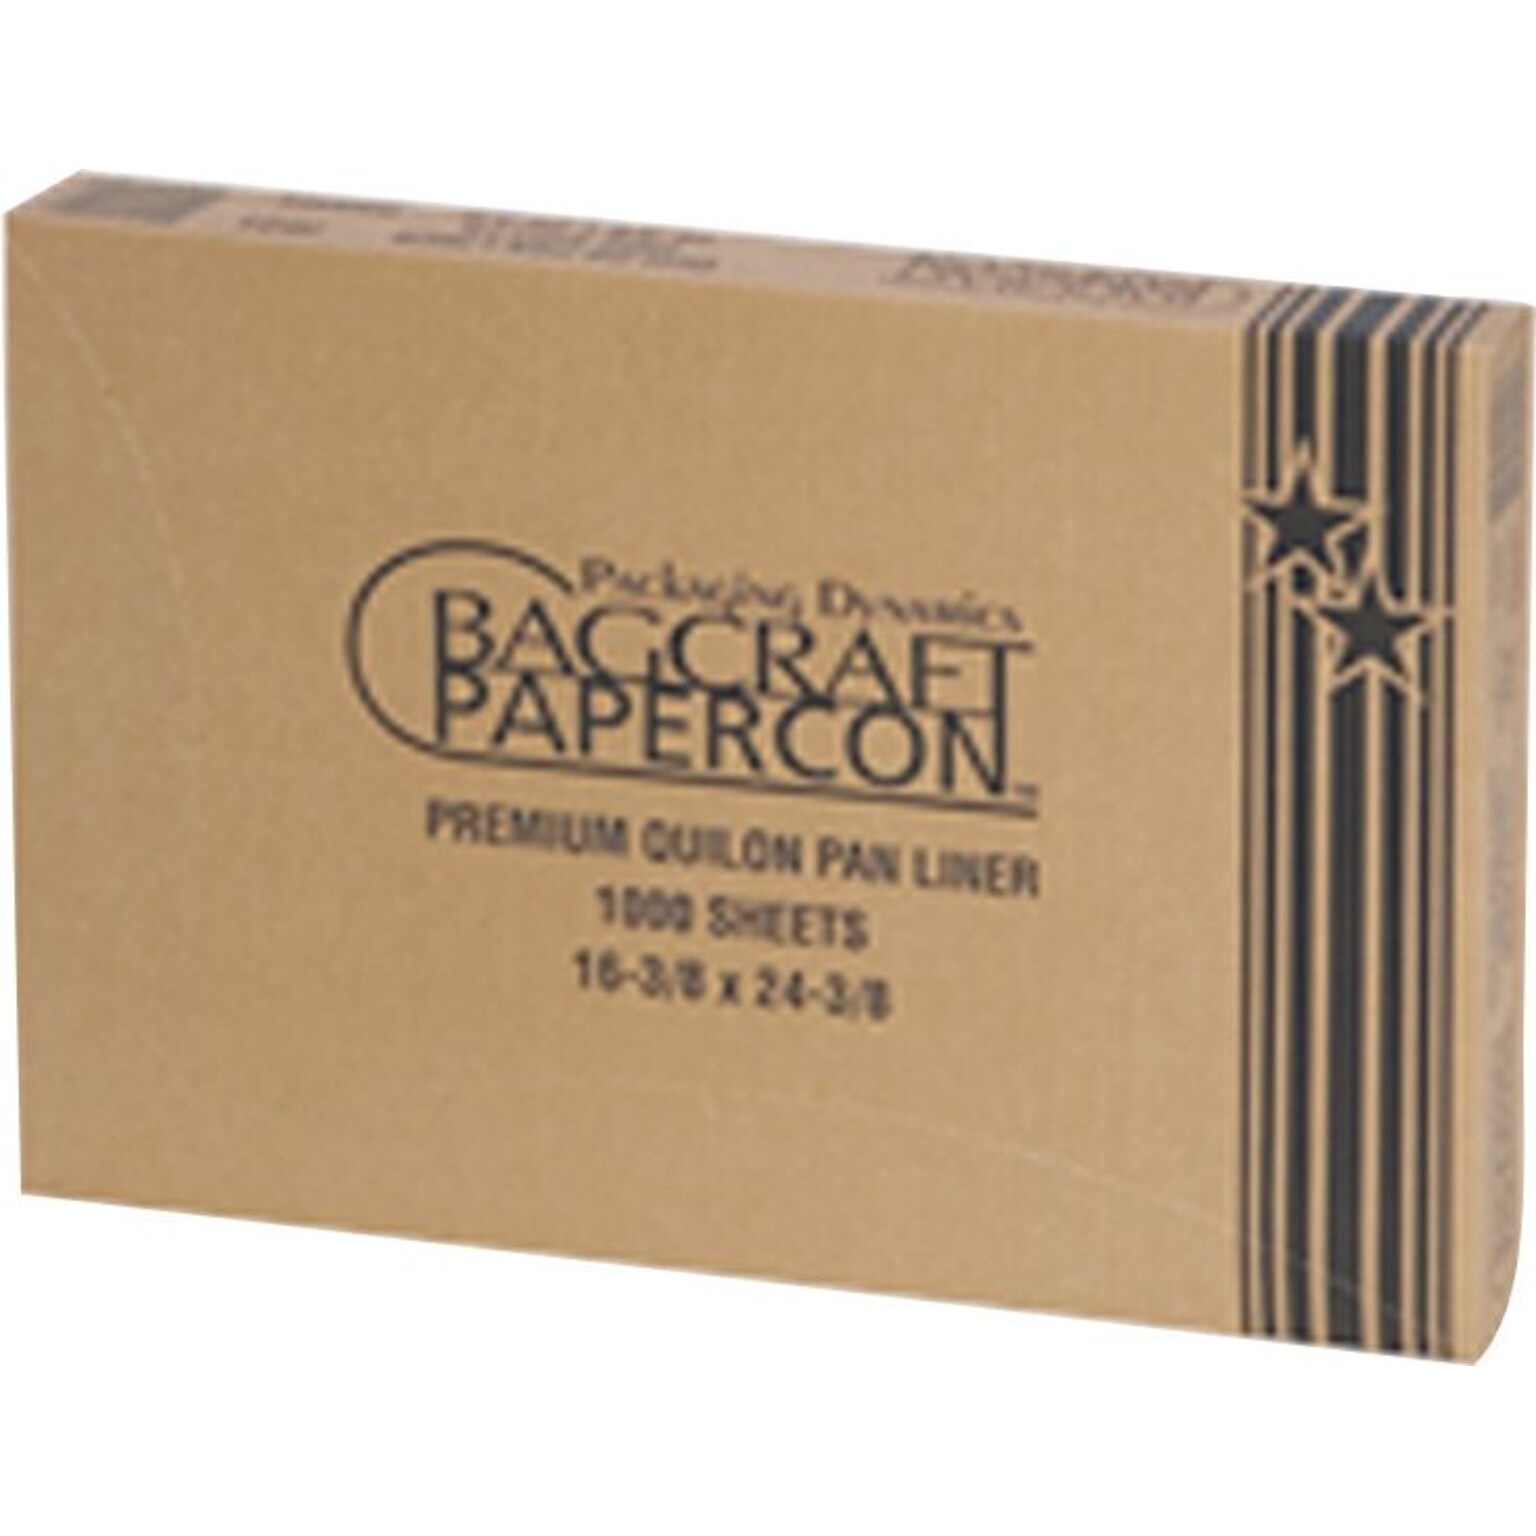 Bagcraft Papercon 030001 Pan Liner; 16 3/8 x 24 3/8, Natural, 100 Sheets/Carton (BGC030001)